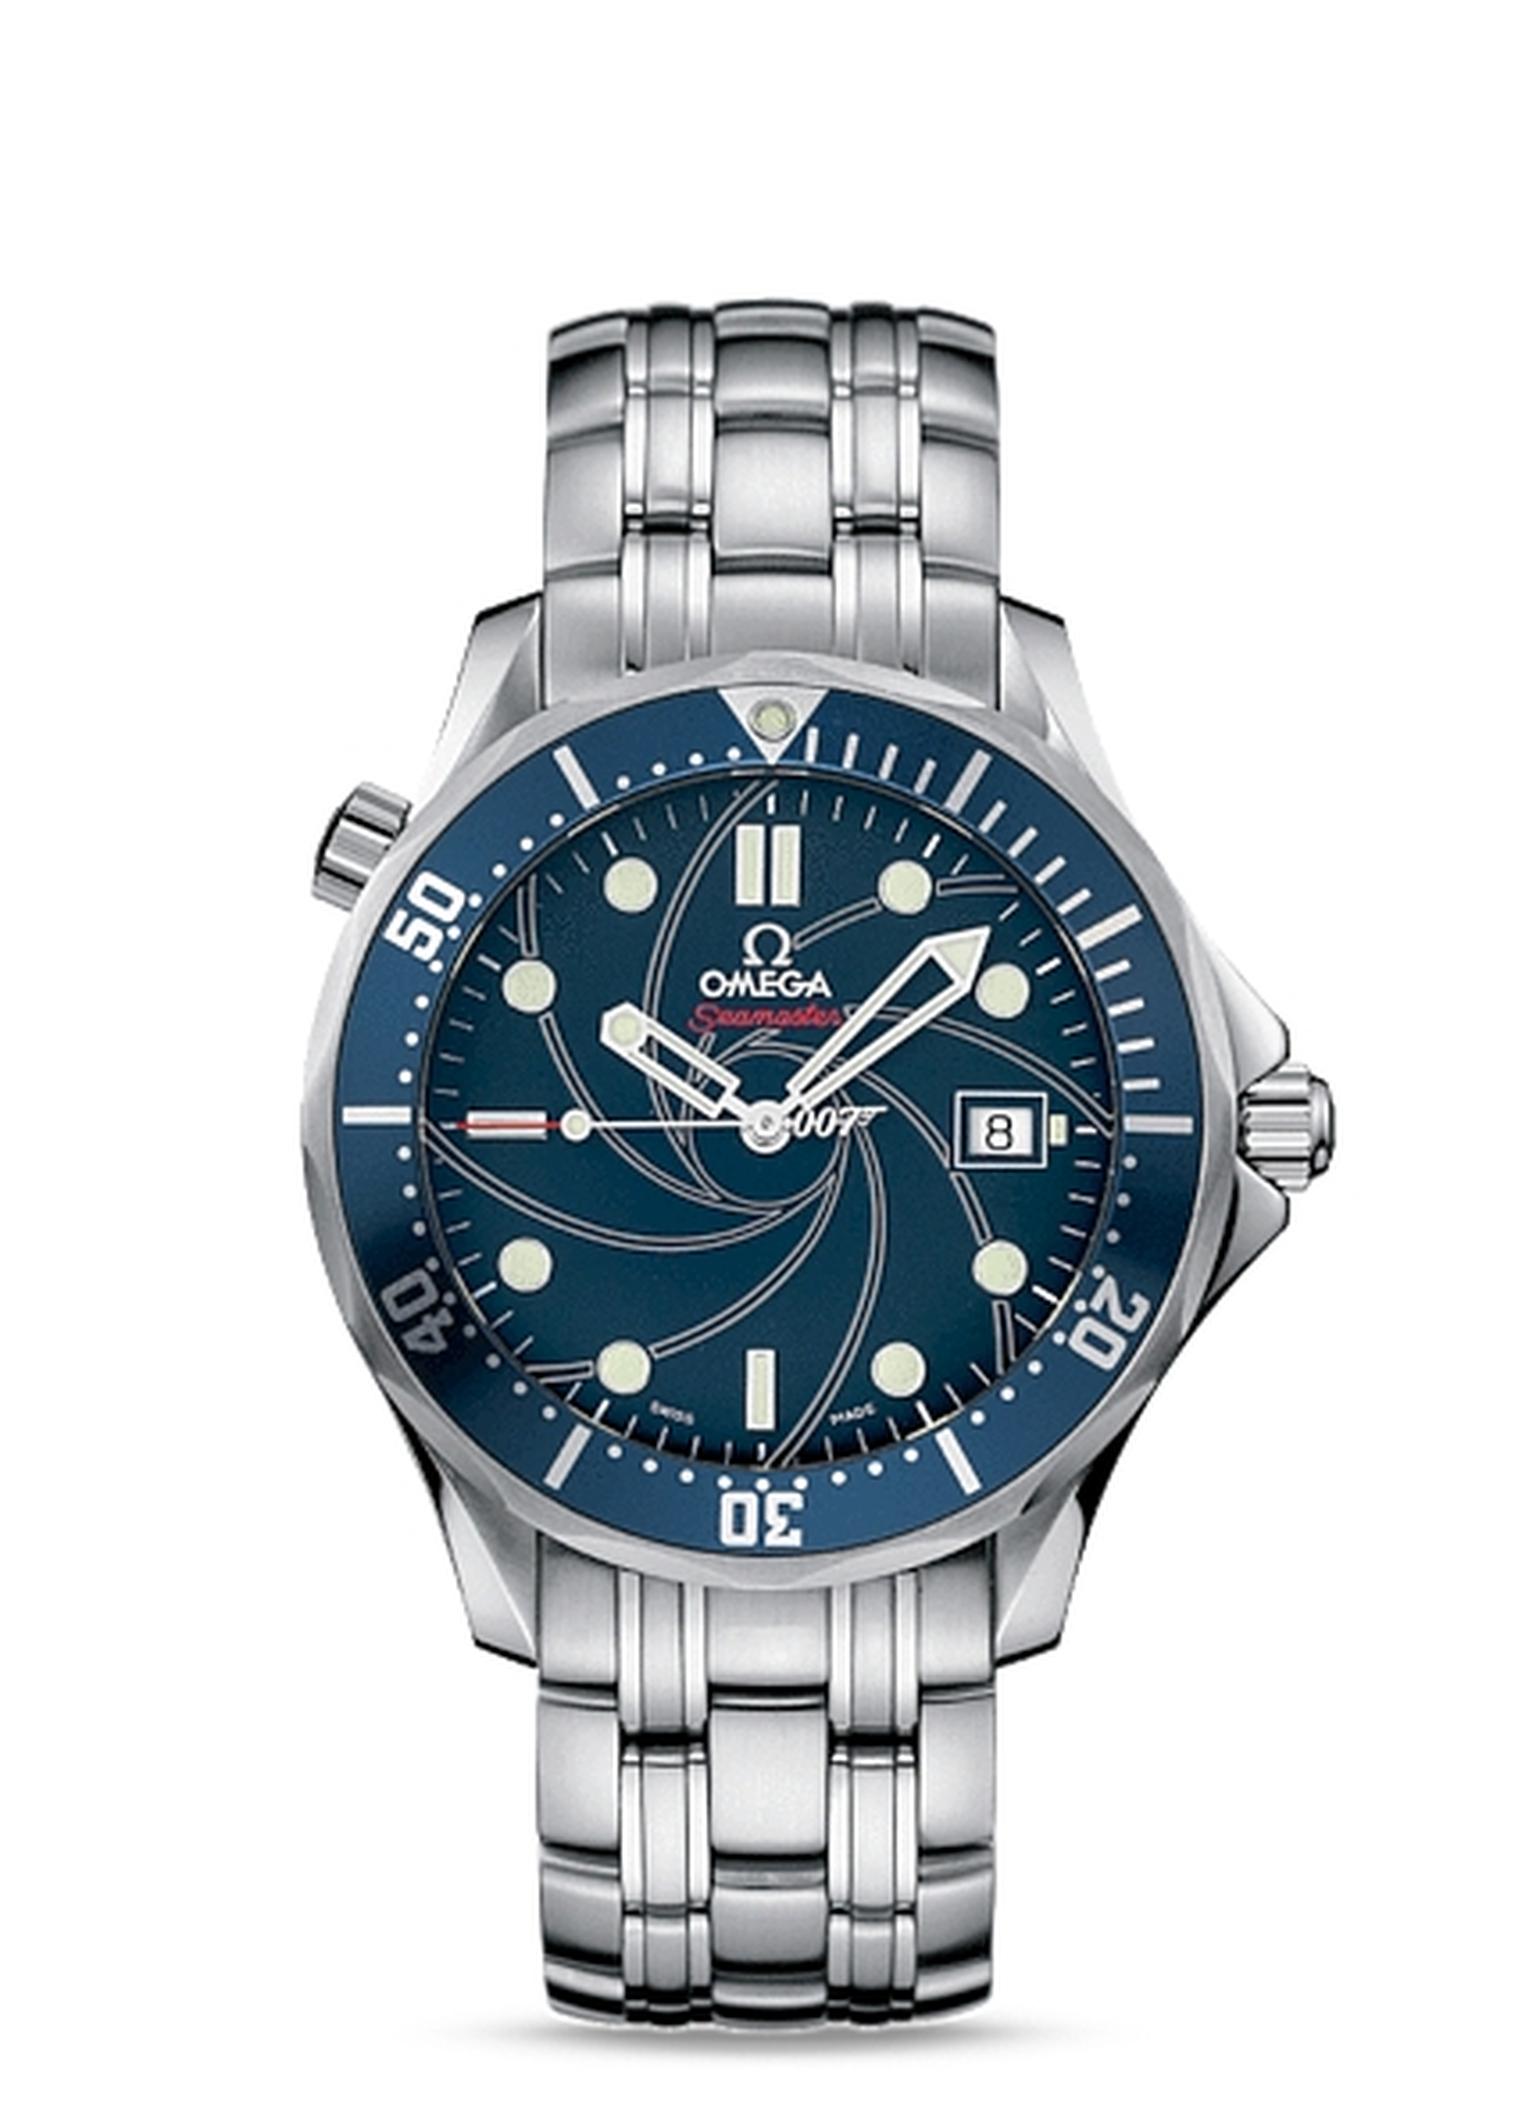 The limited-edition James Bond Omega Seamaster 300m chronometer watch.